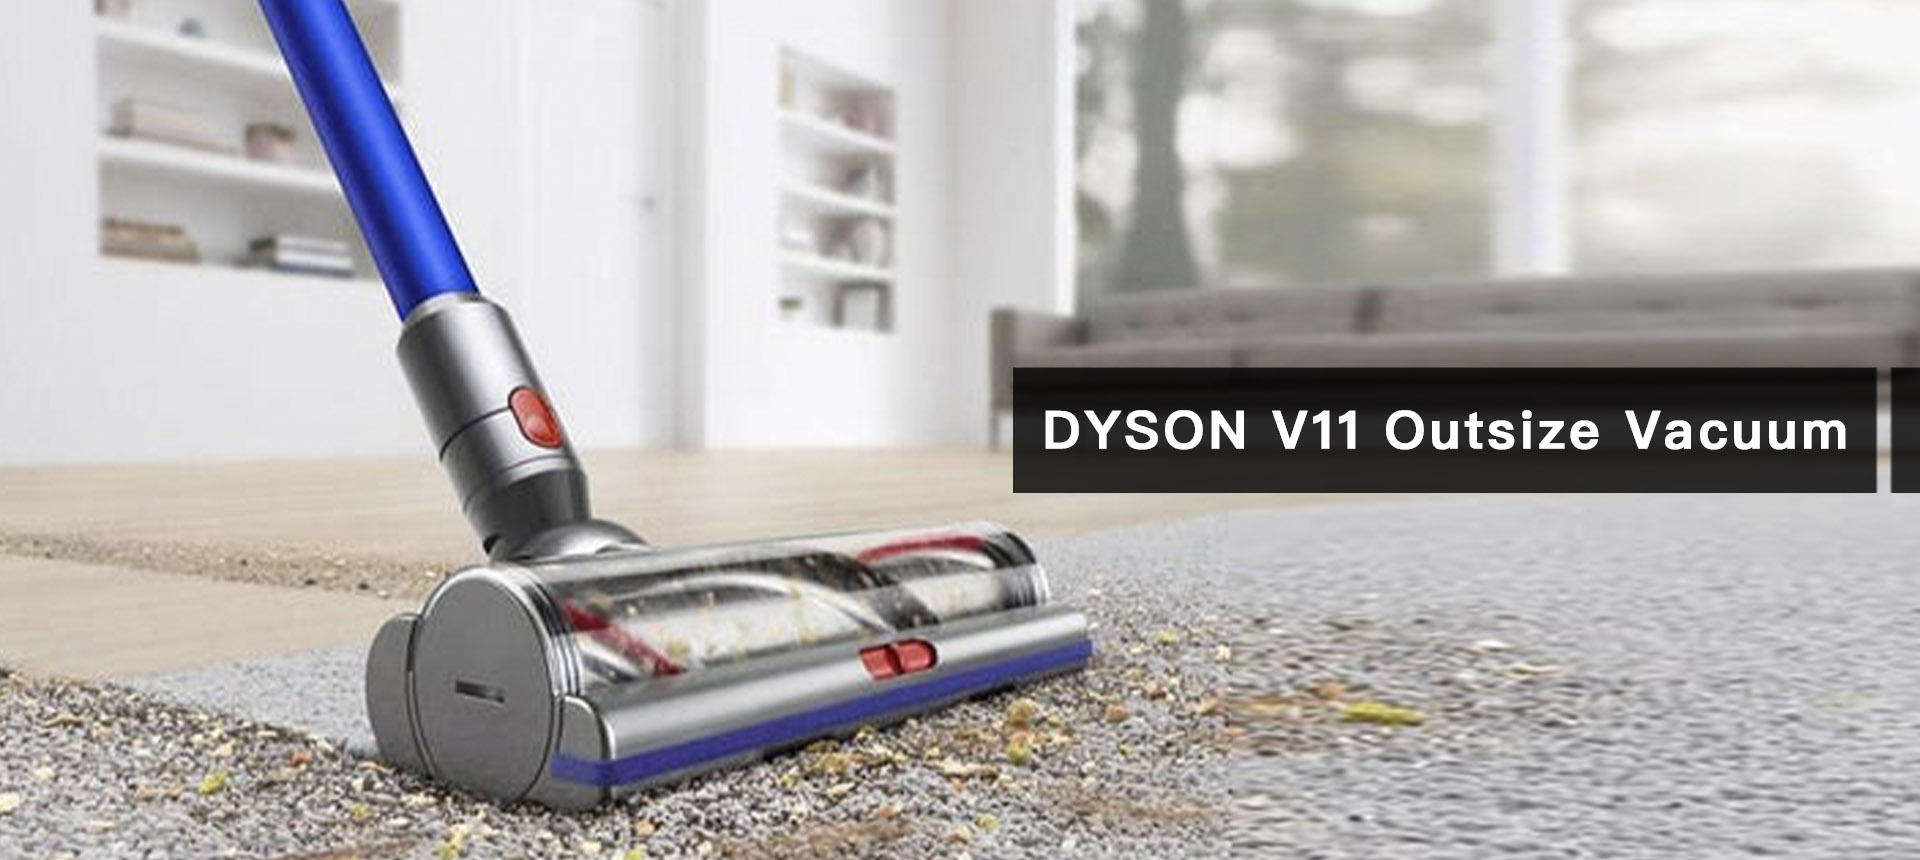 DYSON V11 Outsize Vacuum